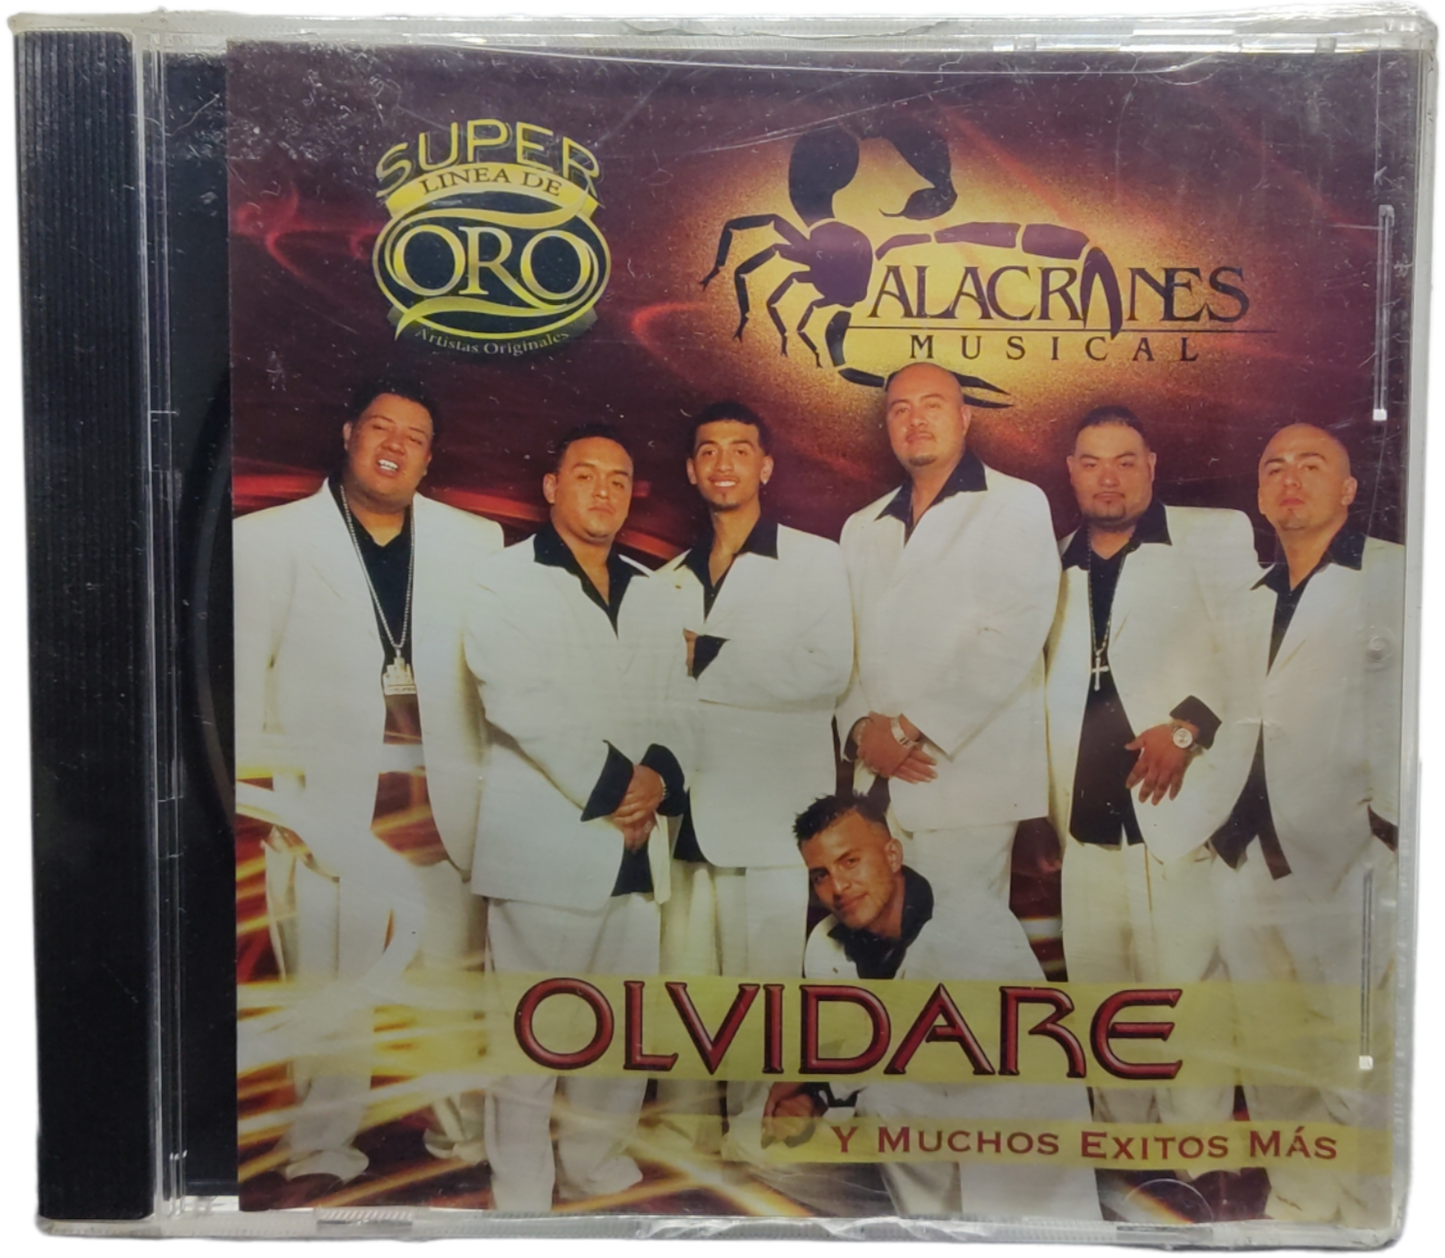 alacranes musical  - hits de oro - olvidare